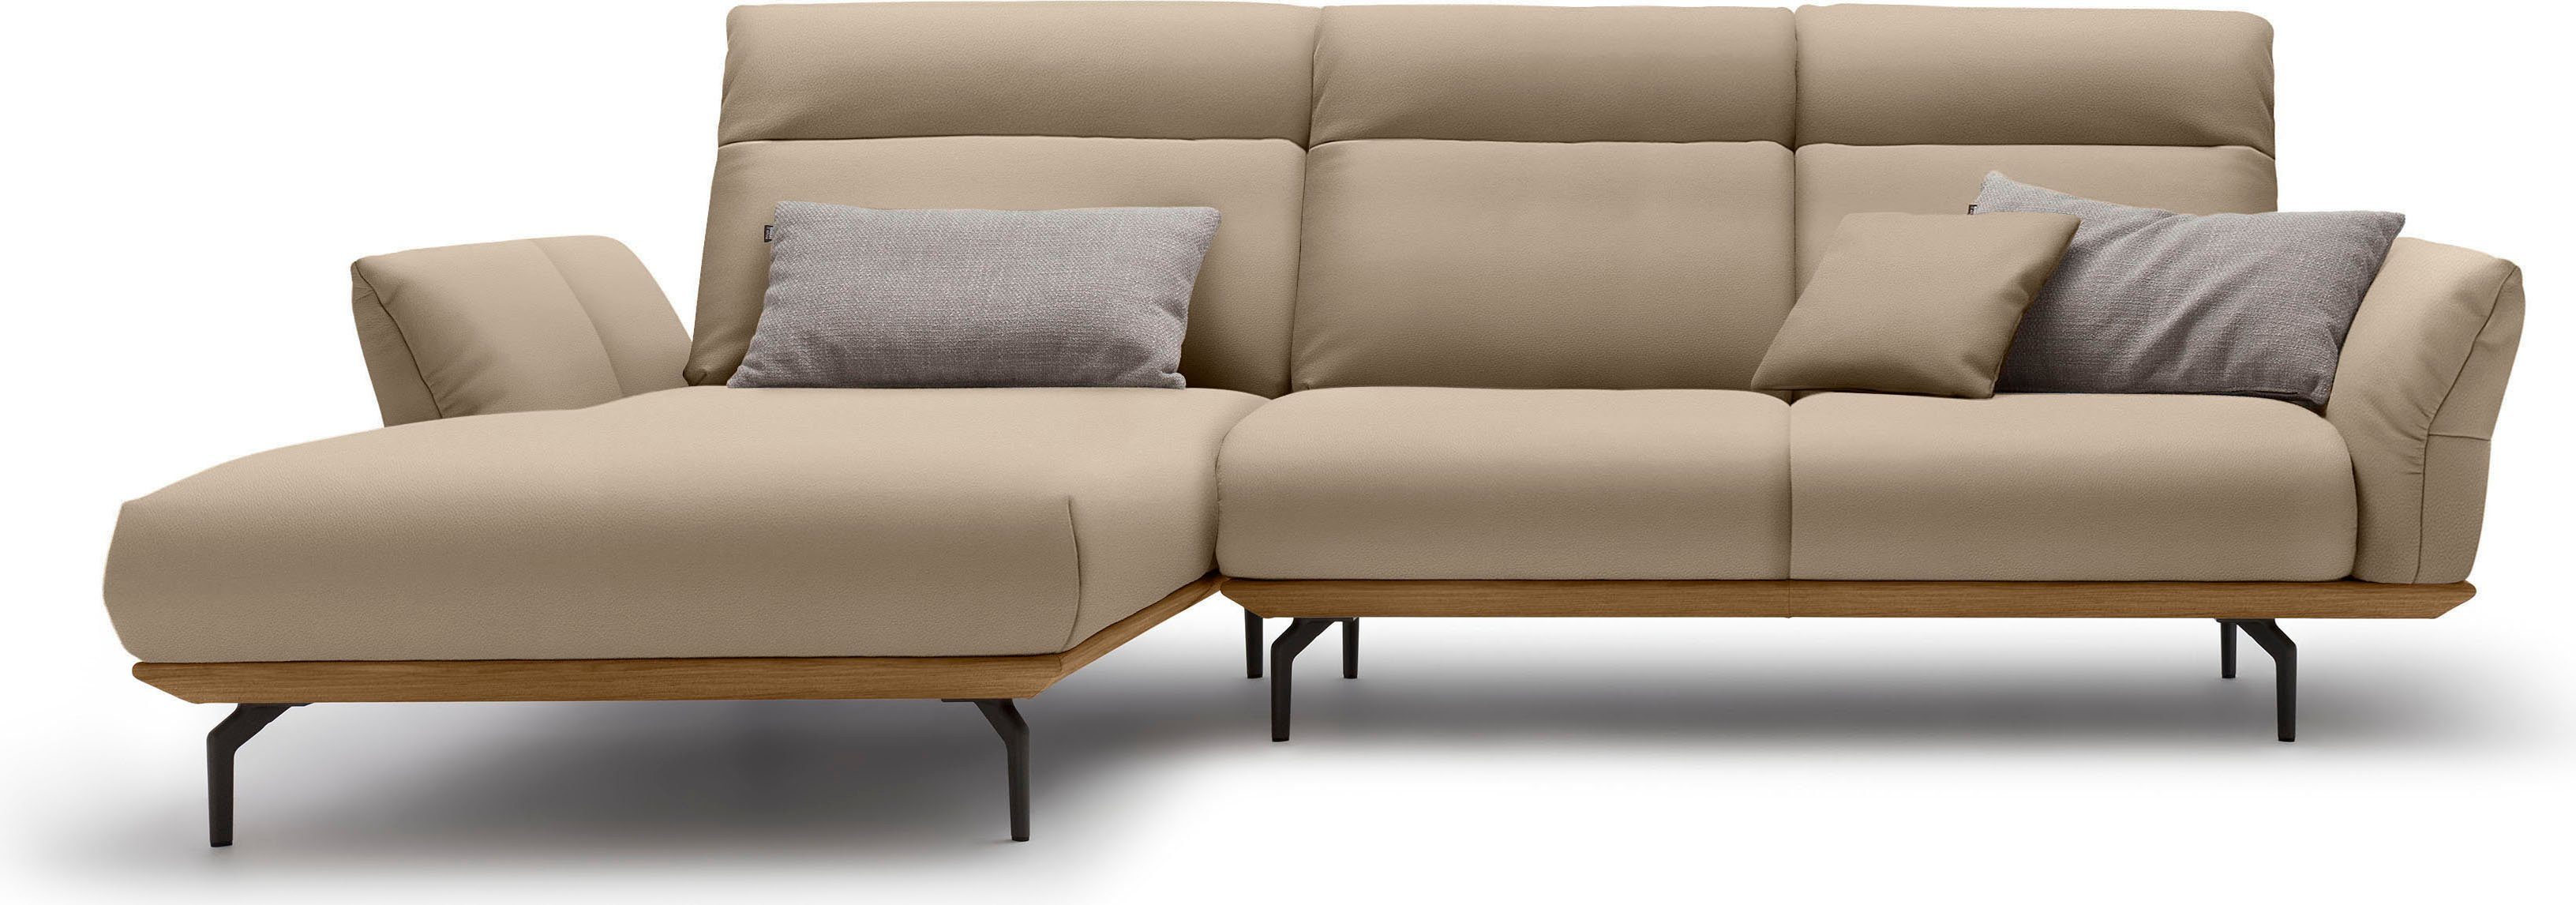 hülsta sofa Ecksofa hs.460, Sockel in Nussbaum, Winkelfüße in Umbragrau, Breite 298 cm | Ecksofas